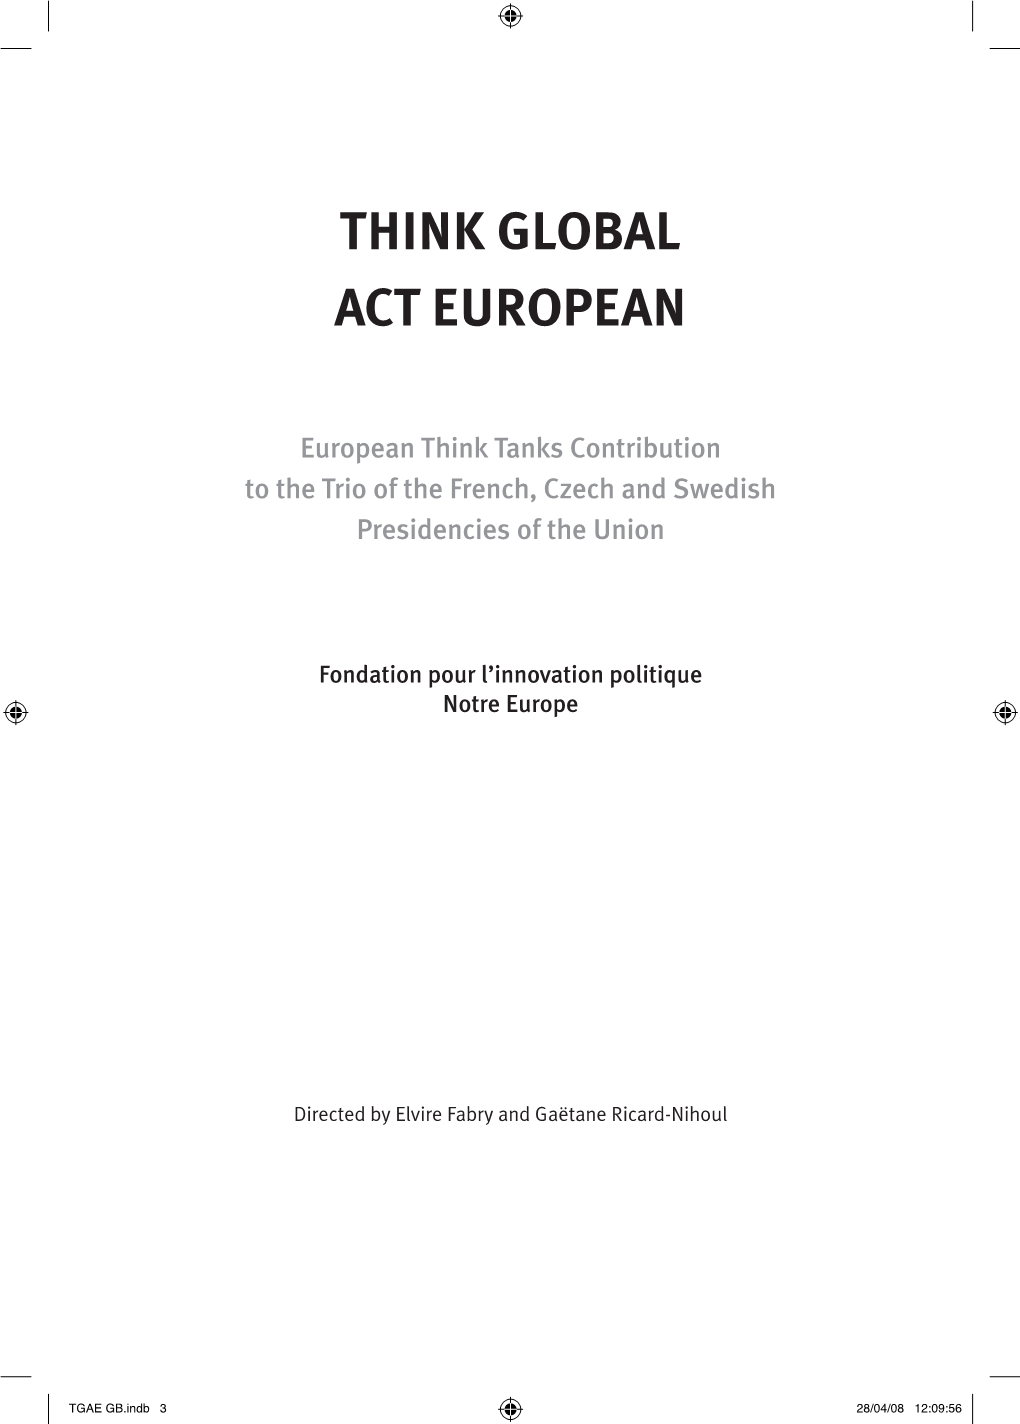 Think Global Act European